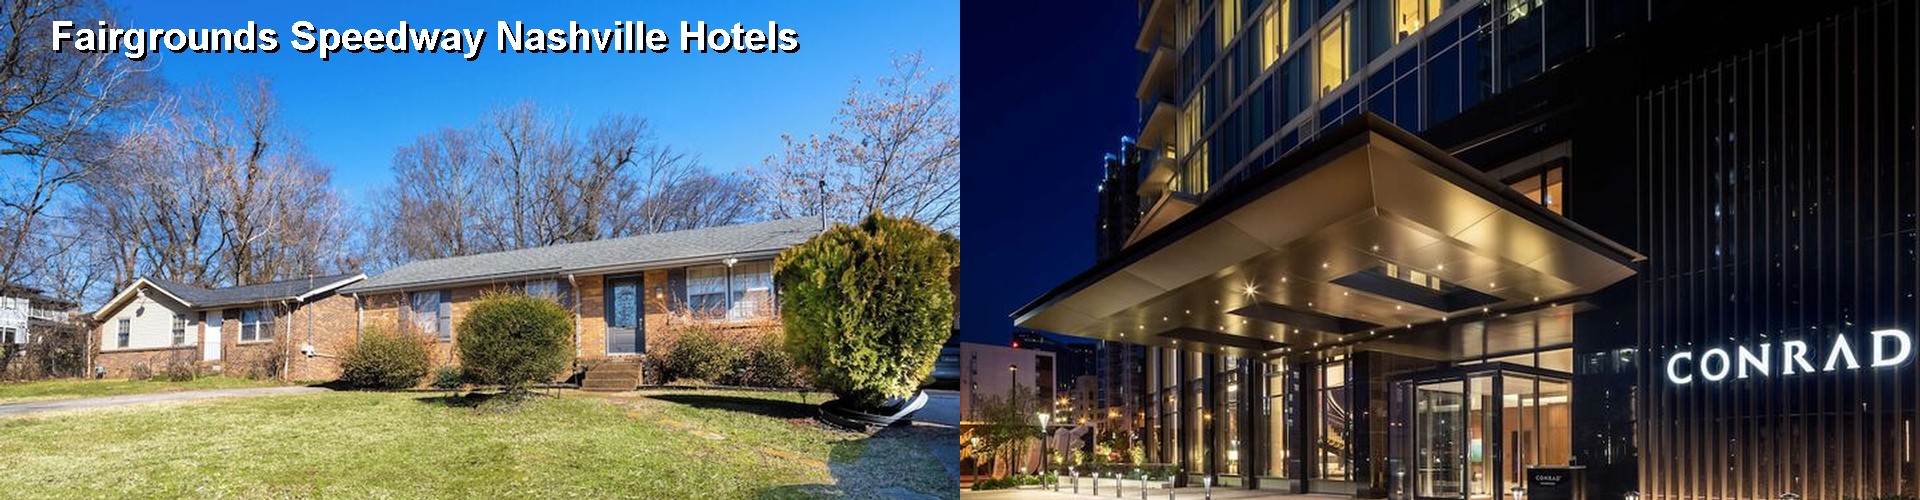 4 Best Hotels near Fairgrounds Speedway Nashville